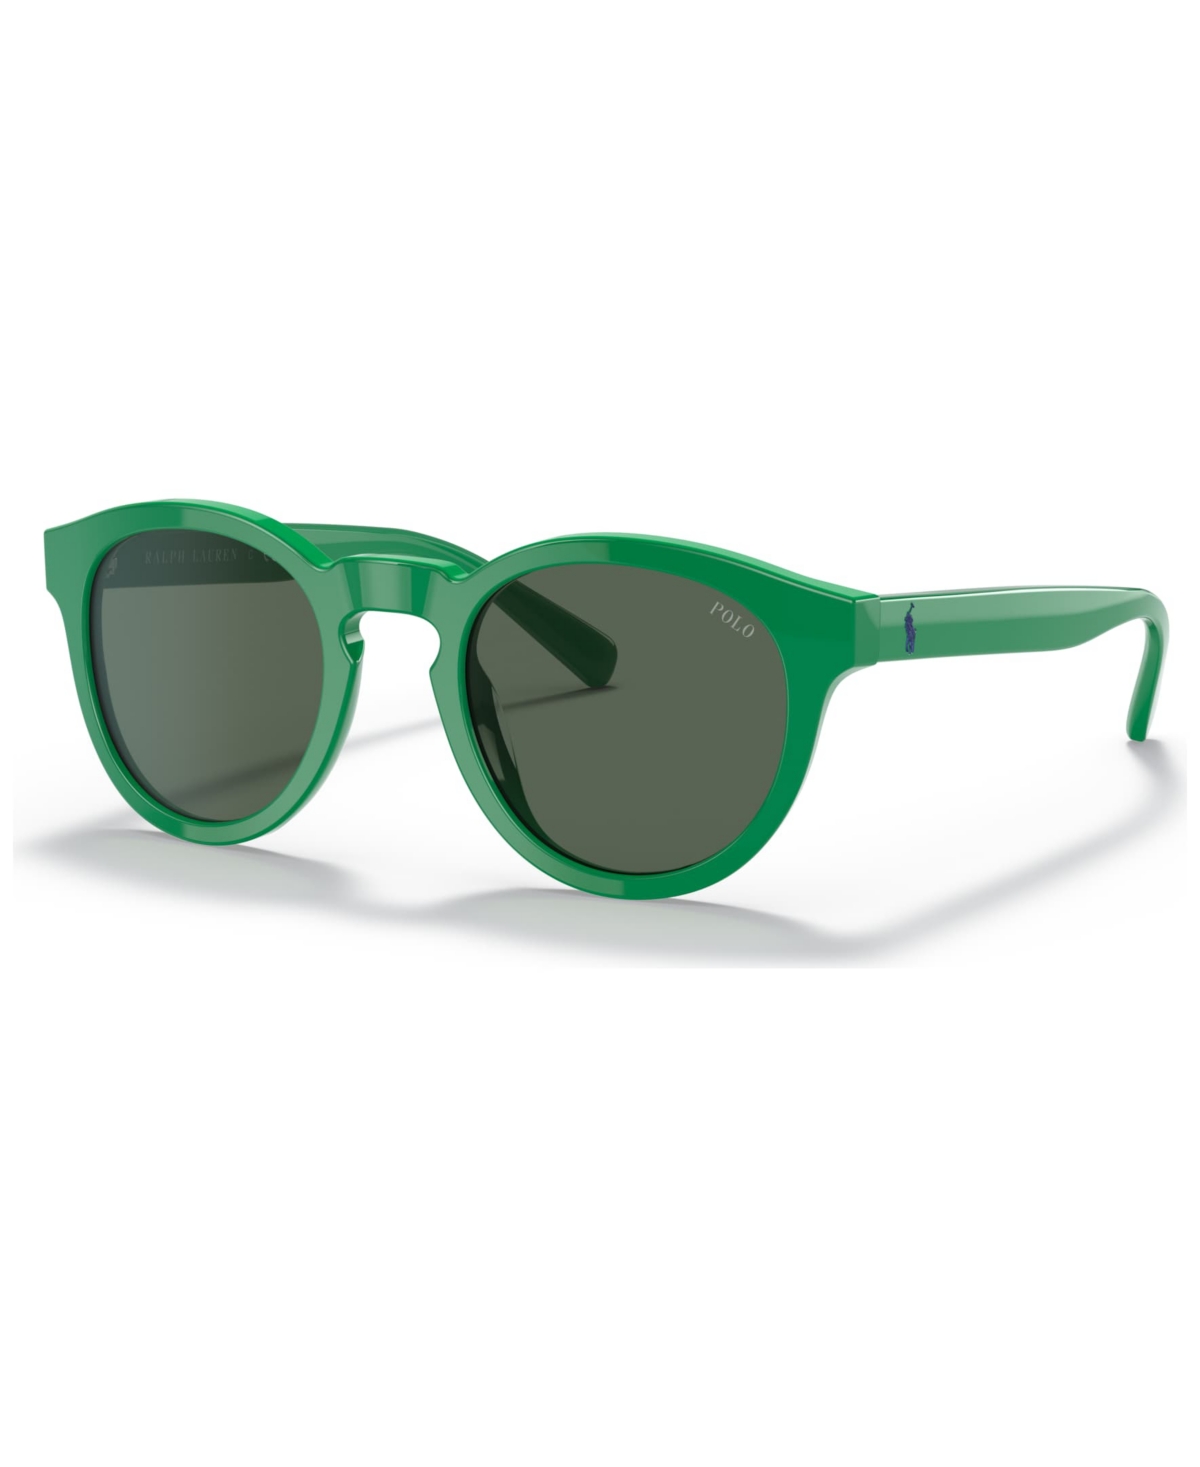 Polo Ralph Lauren Men's Sunglasses, Ph4184 In Shiny Cruise Green